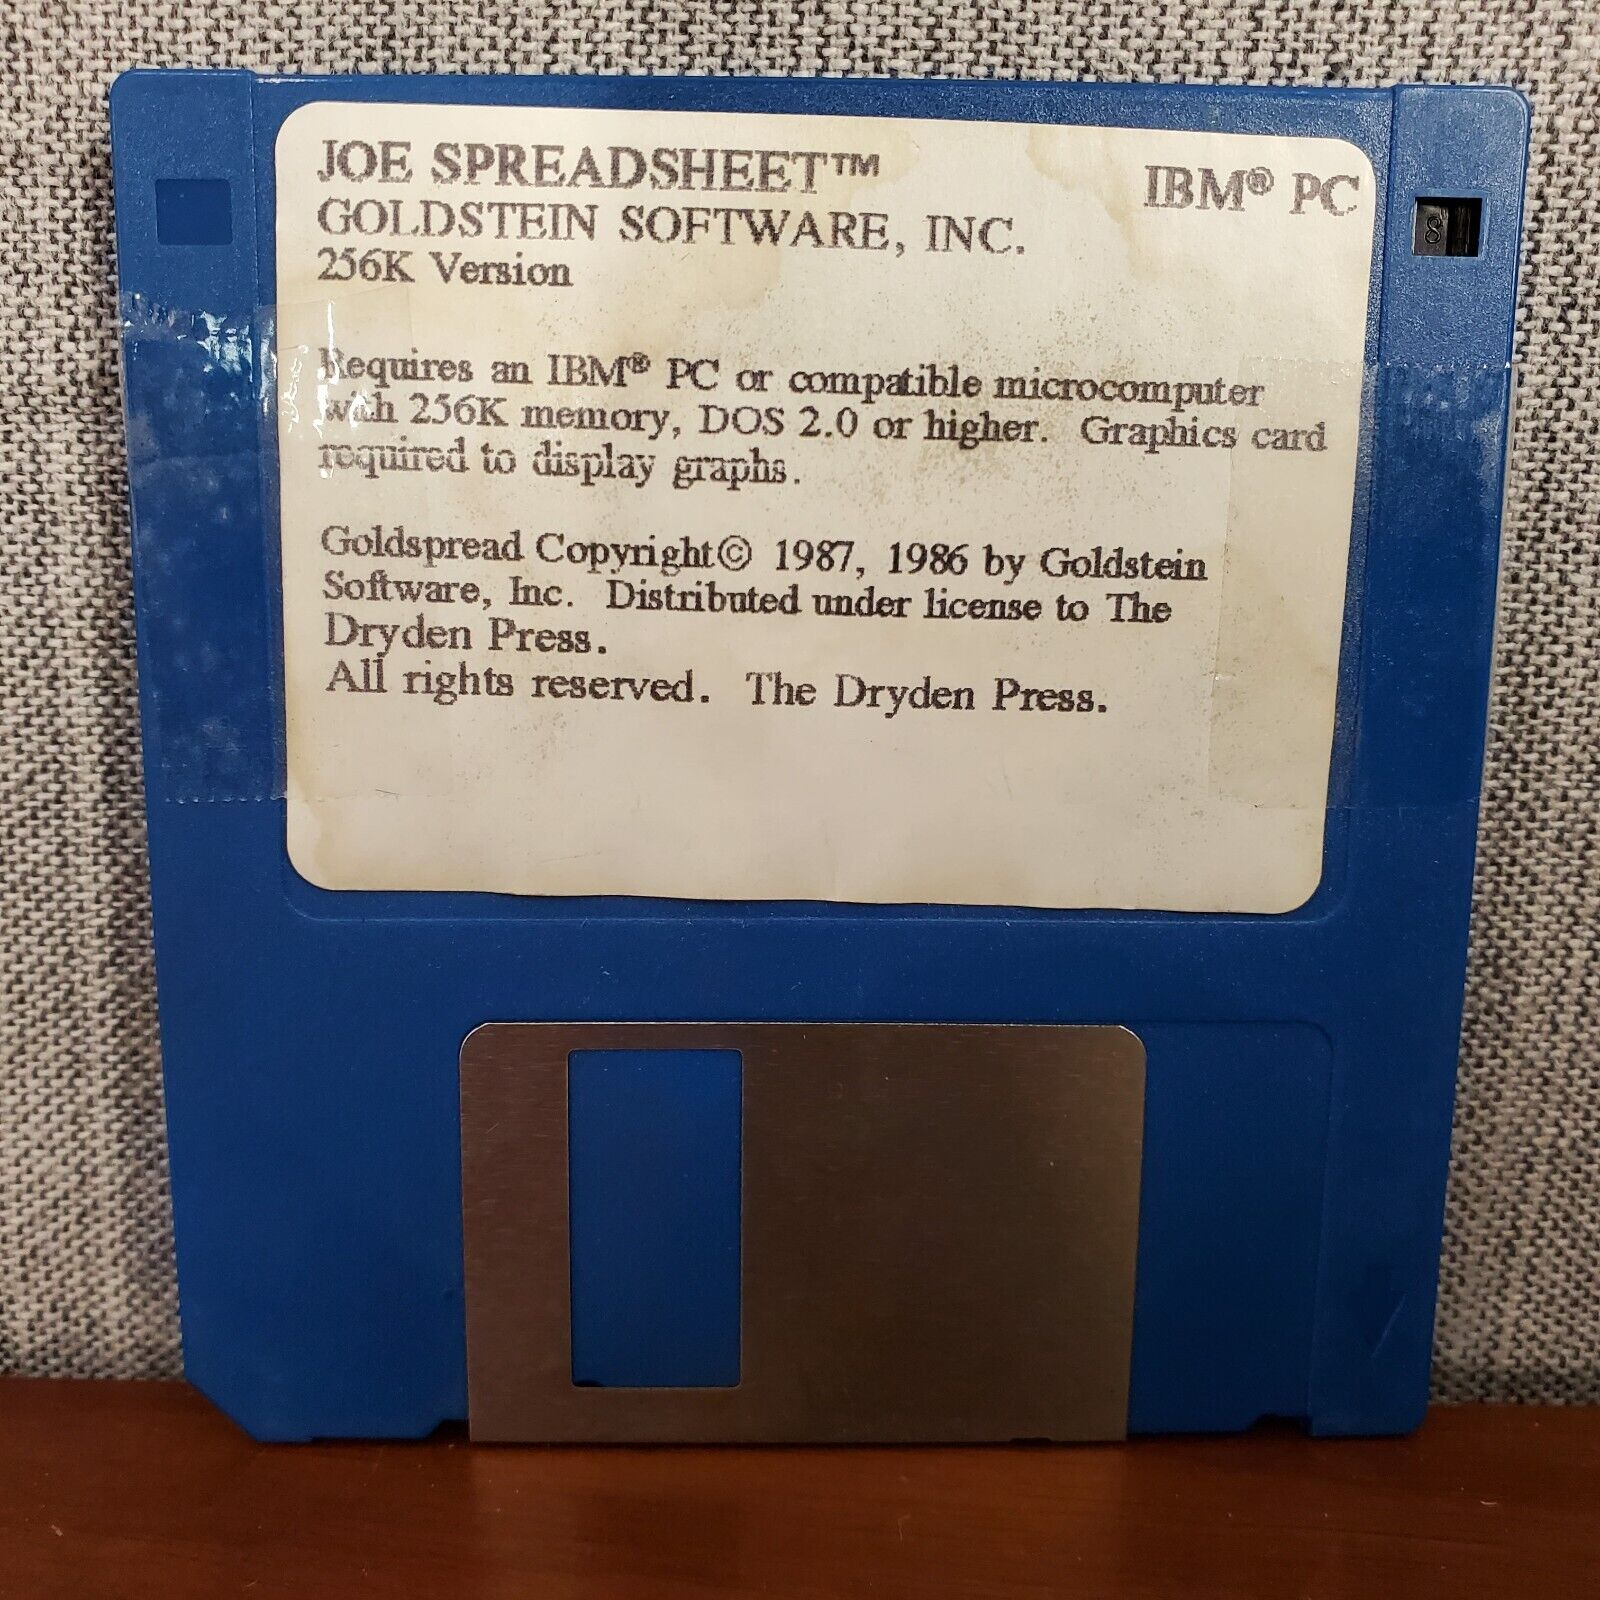 Goldspread Joe Spreadhseet 256k Version System Disk 1987 1986 Floppy 3.5 Vtg PC